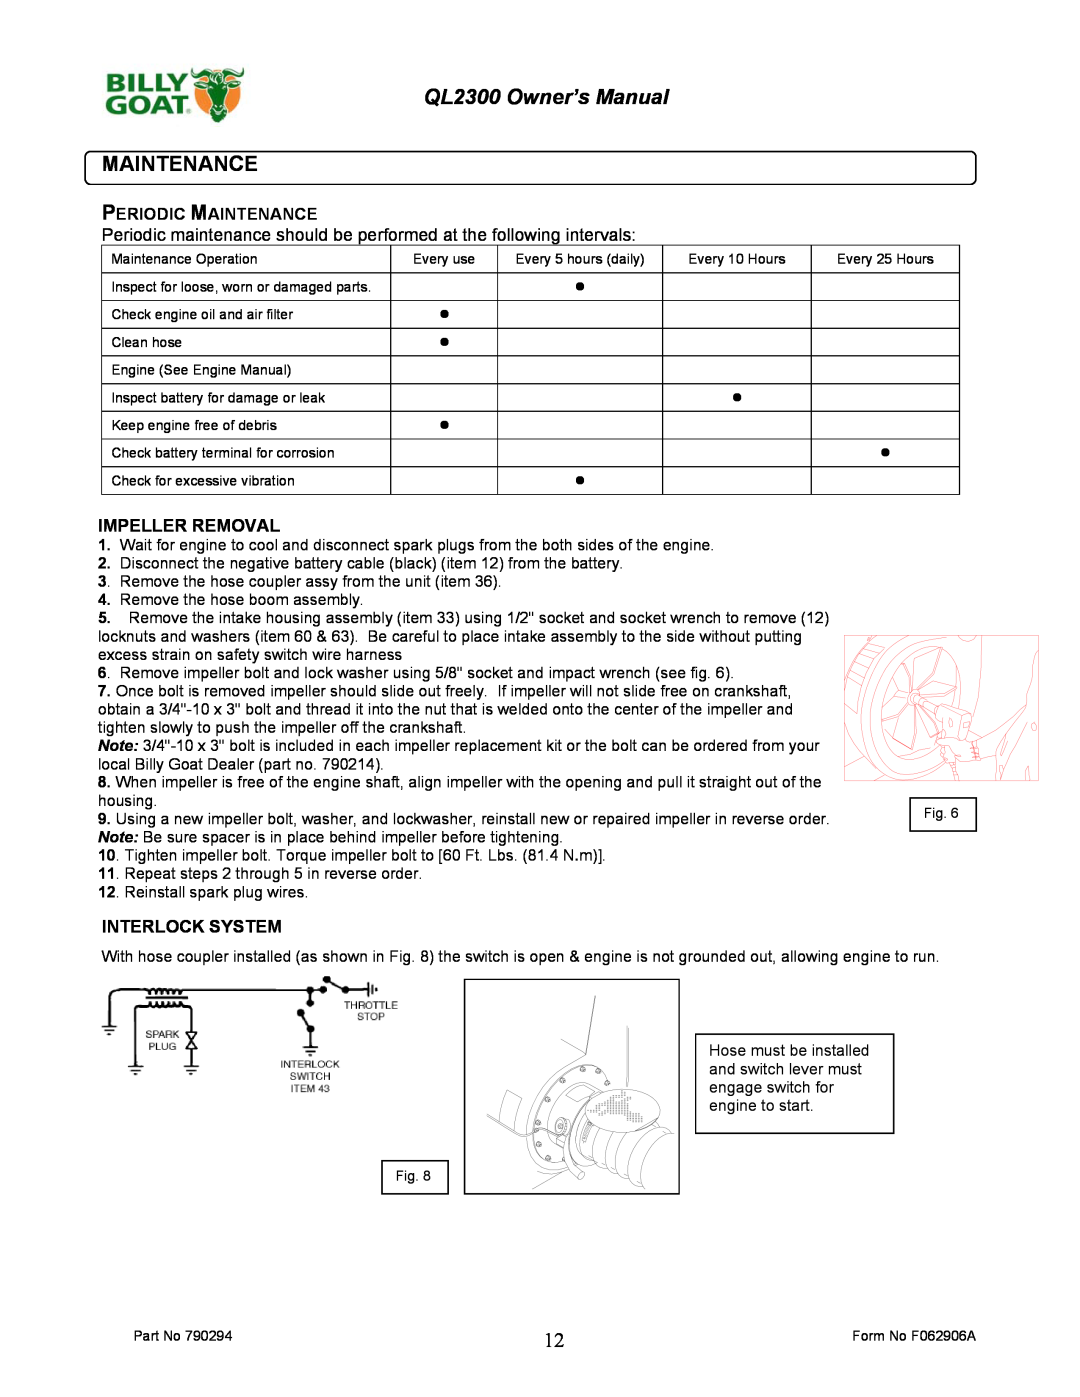 Billy Goat QL2300KO owner manual Periodic Maintenance, Impeller Removal, Interlock System 